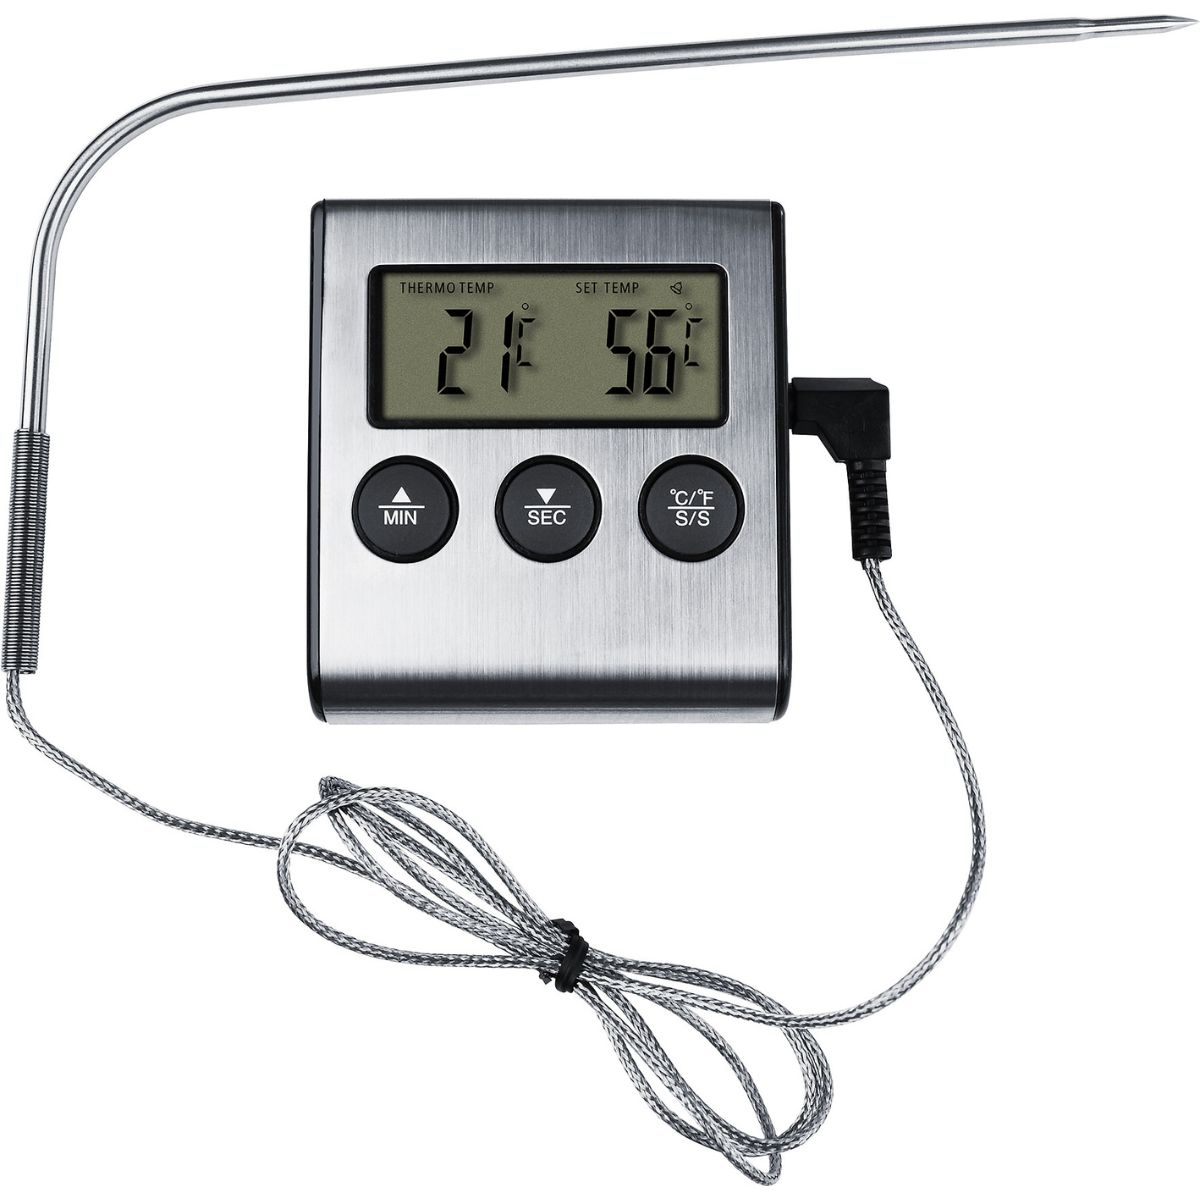 11 STEBA Silber Digitales AC Bratenthermometer,